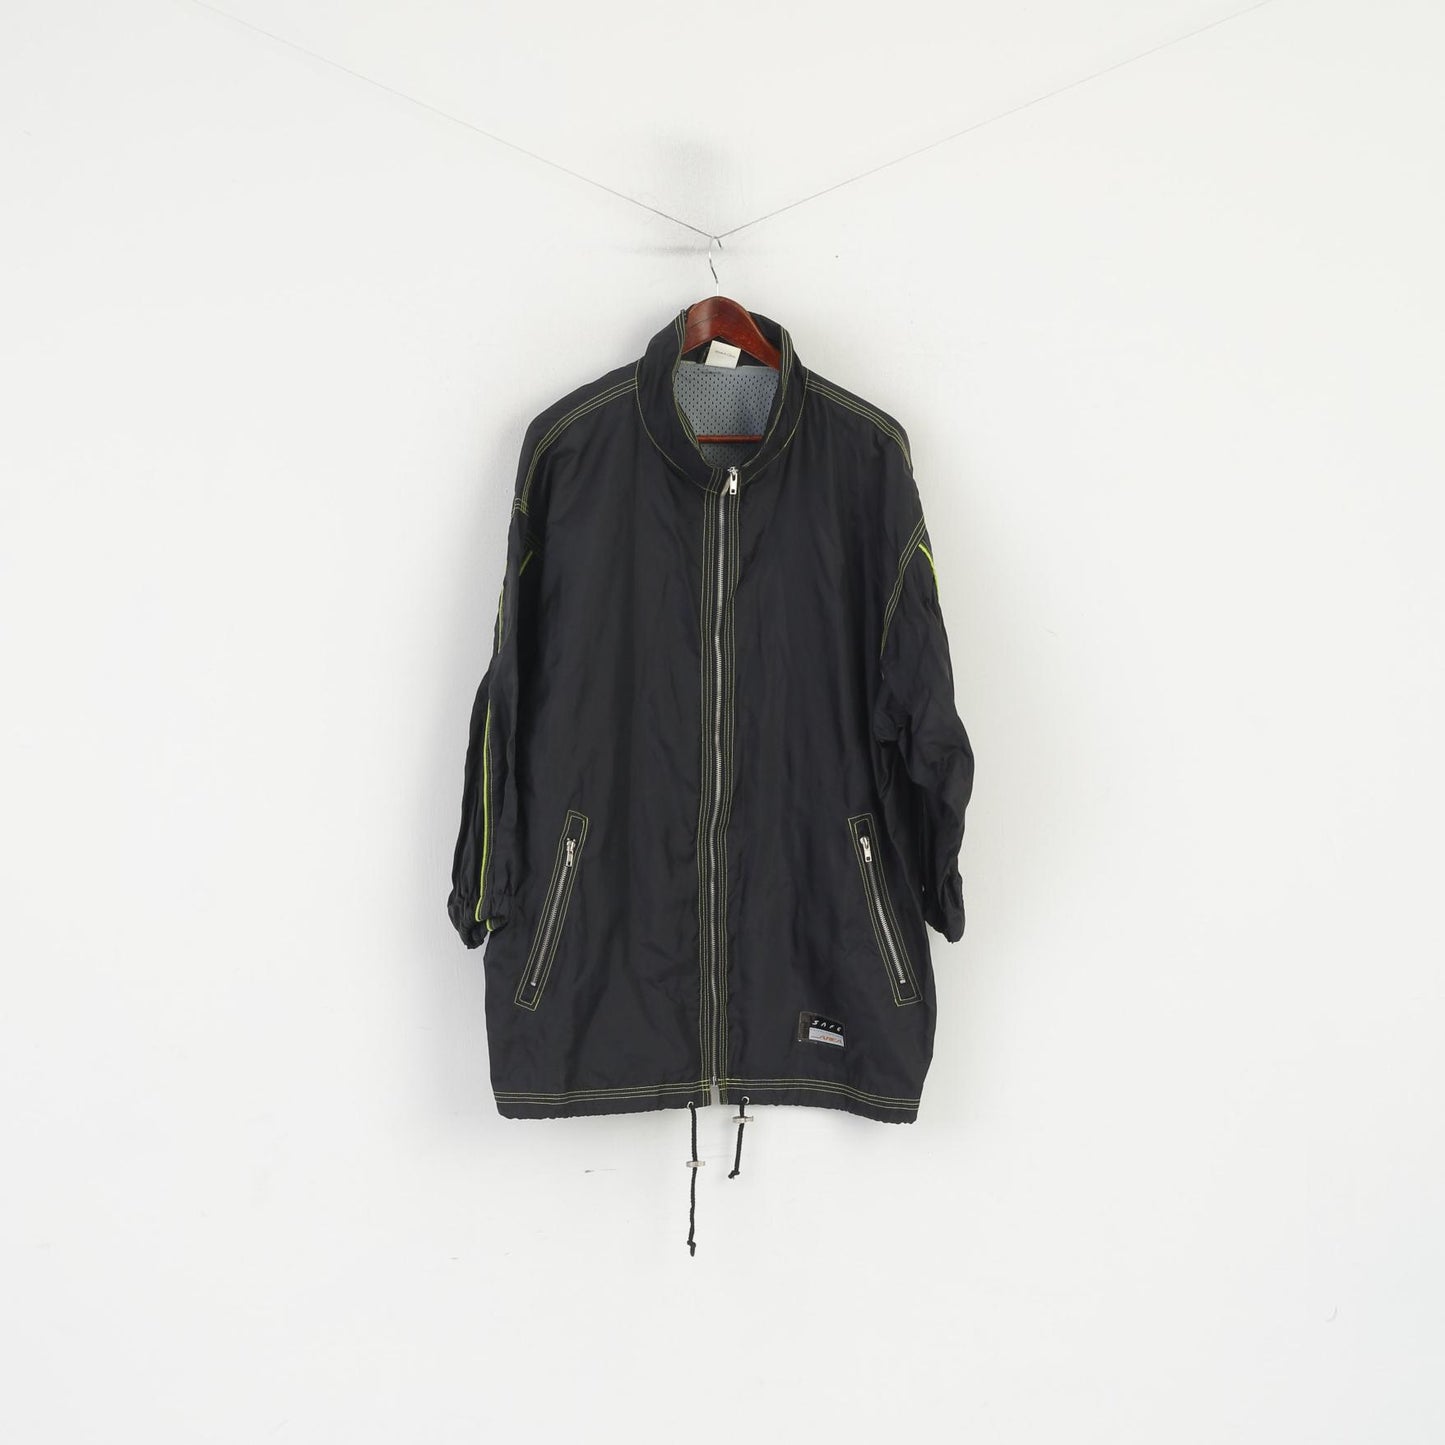 Etirel Men L Long Jacket Black Nylon Waterproof Full Zipper Rainproof Vintage Top